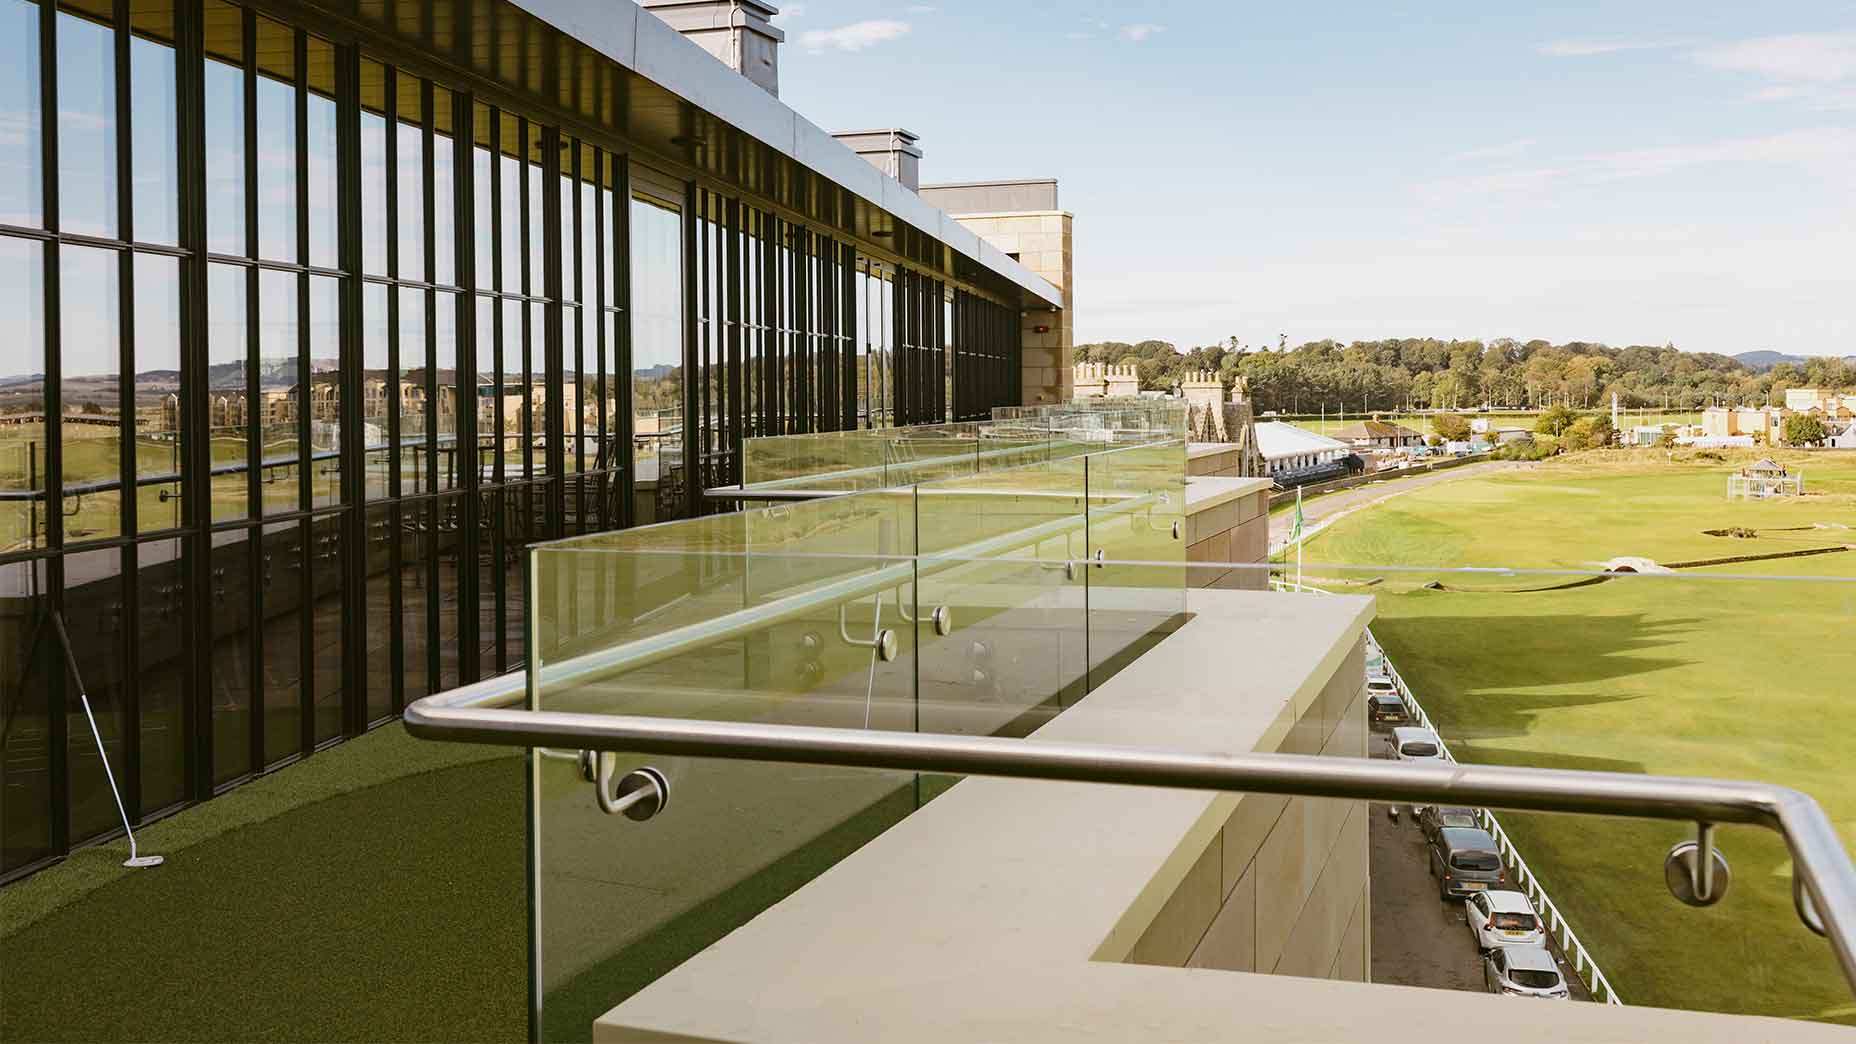 The best bar in golf? Rooftop overlooking St. Andrews opens